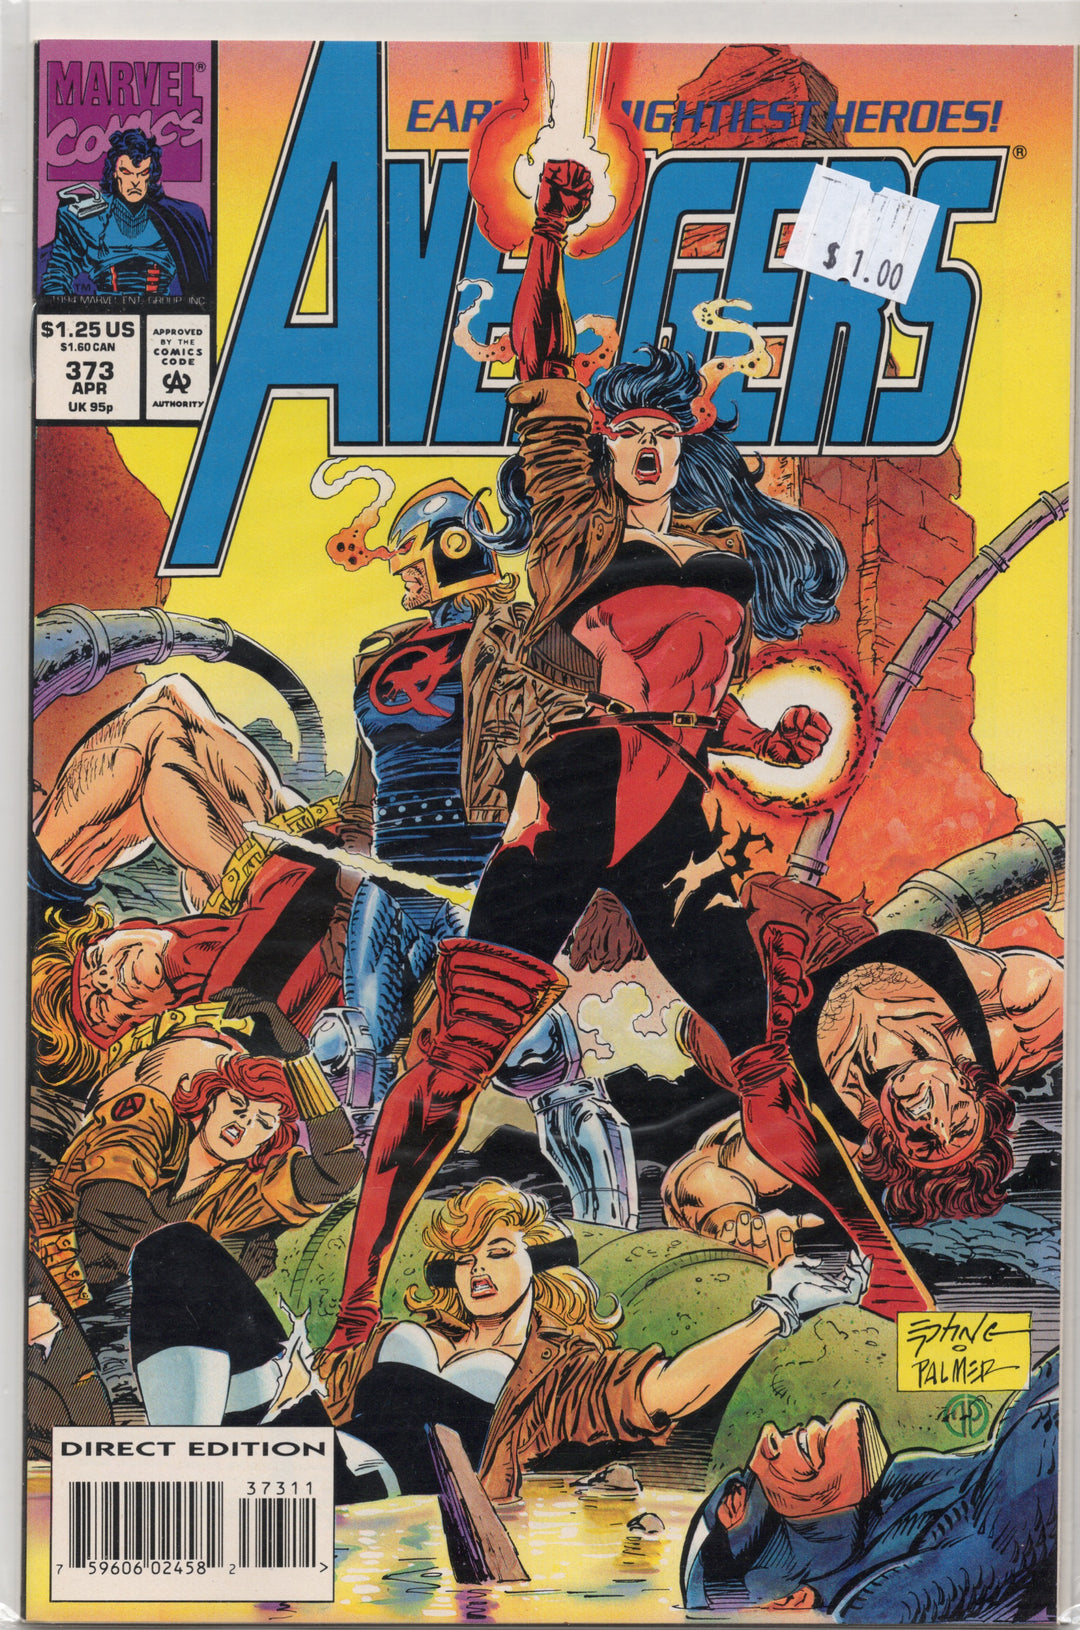 The Avengers #373